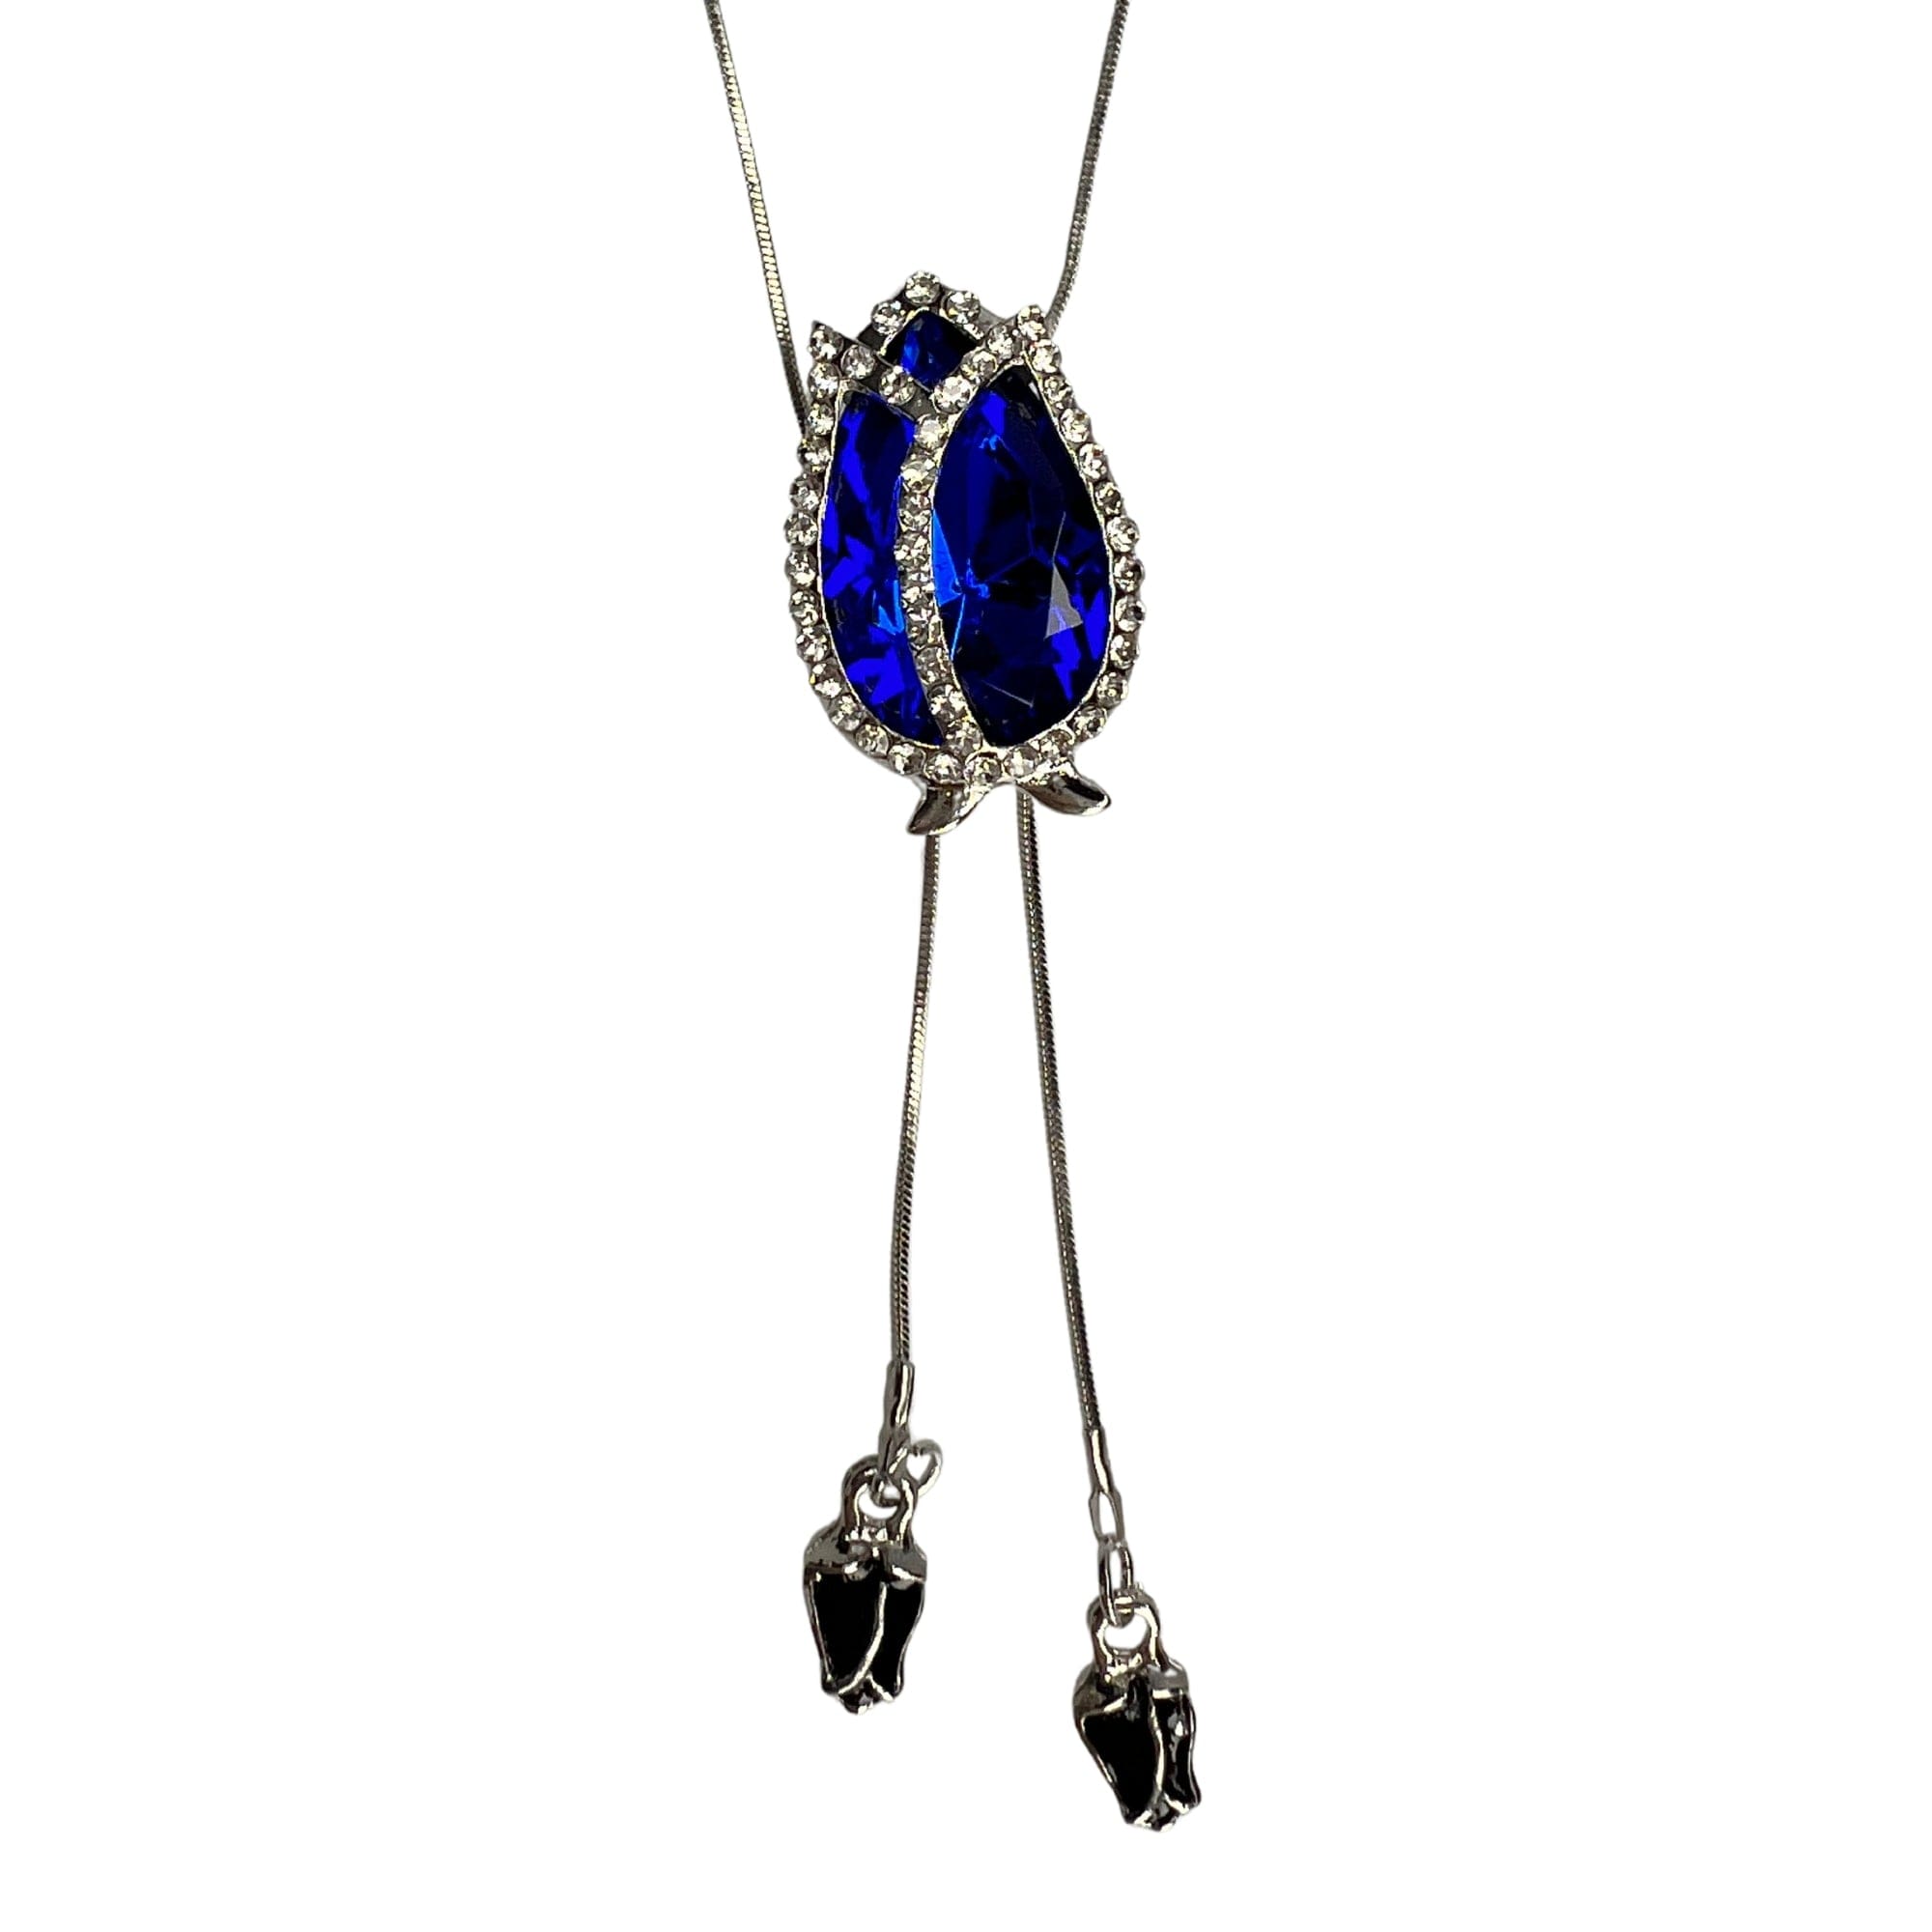 Carmen smyckehalsband - Blå - Halsband